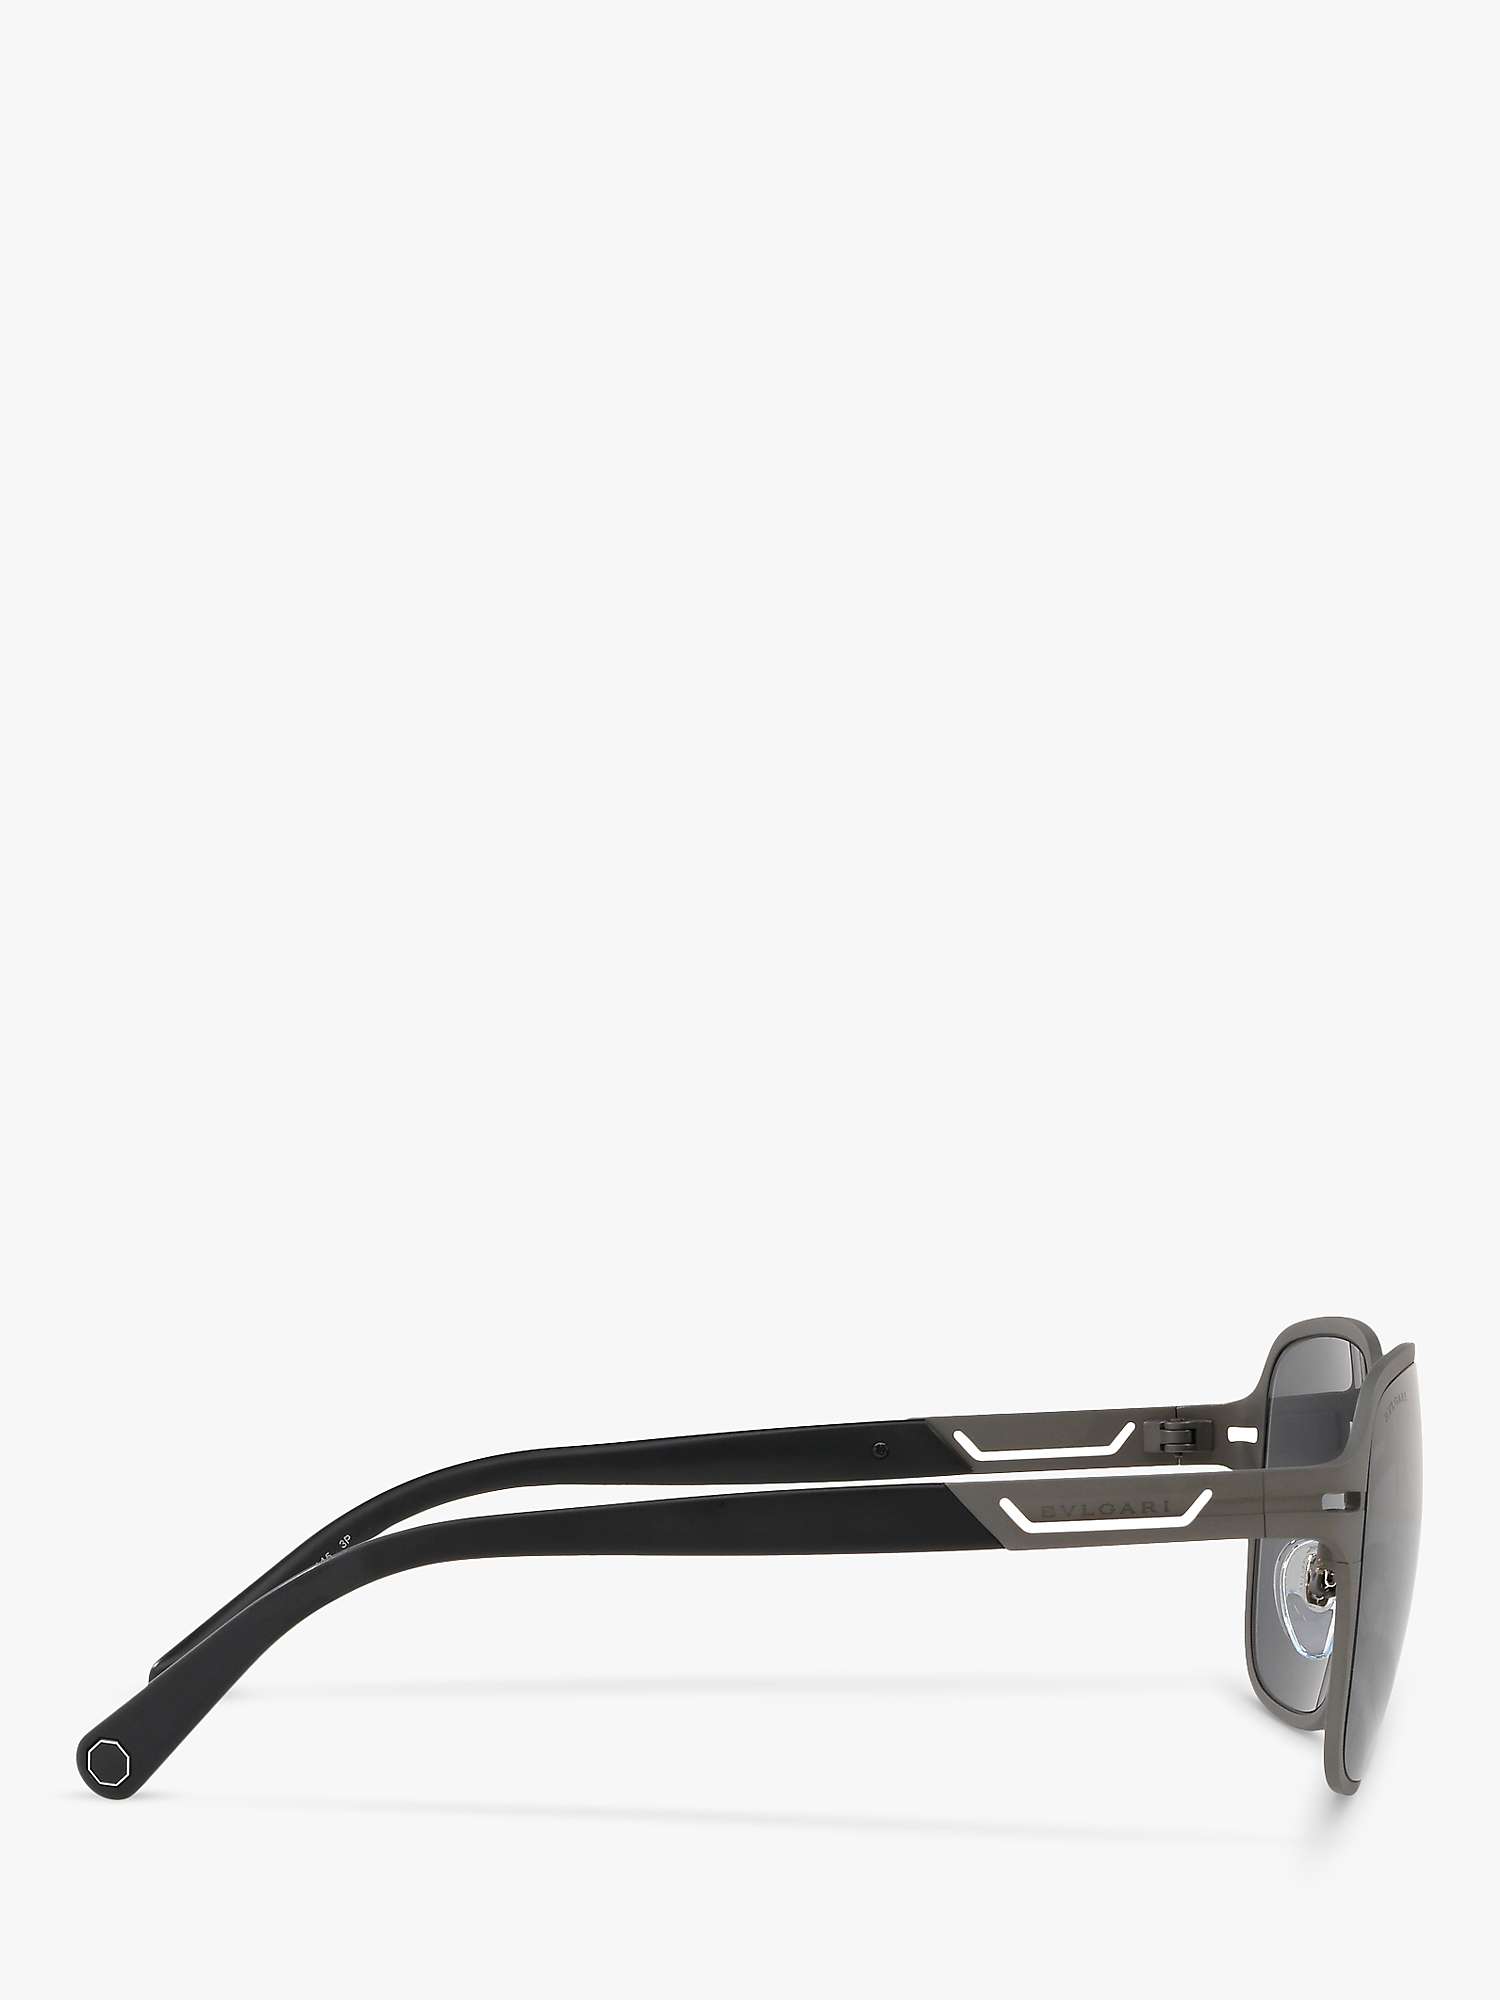 Buy BVLGARI BV5046TK Men's Polarised Square Sunglasses Online at johnlewis.com